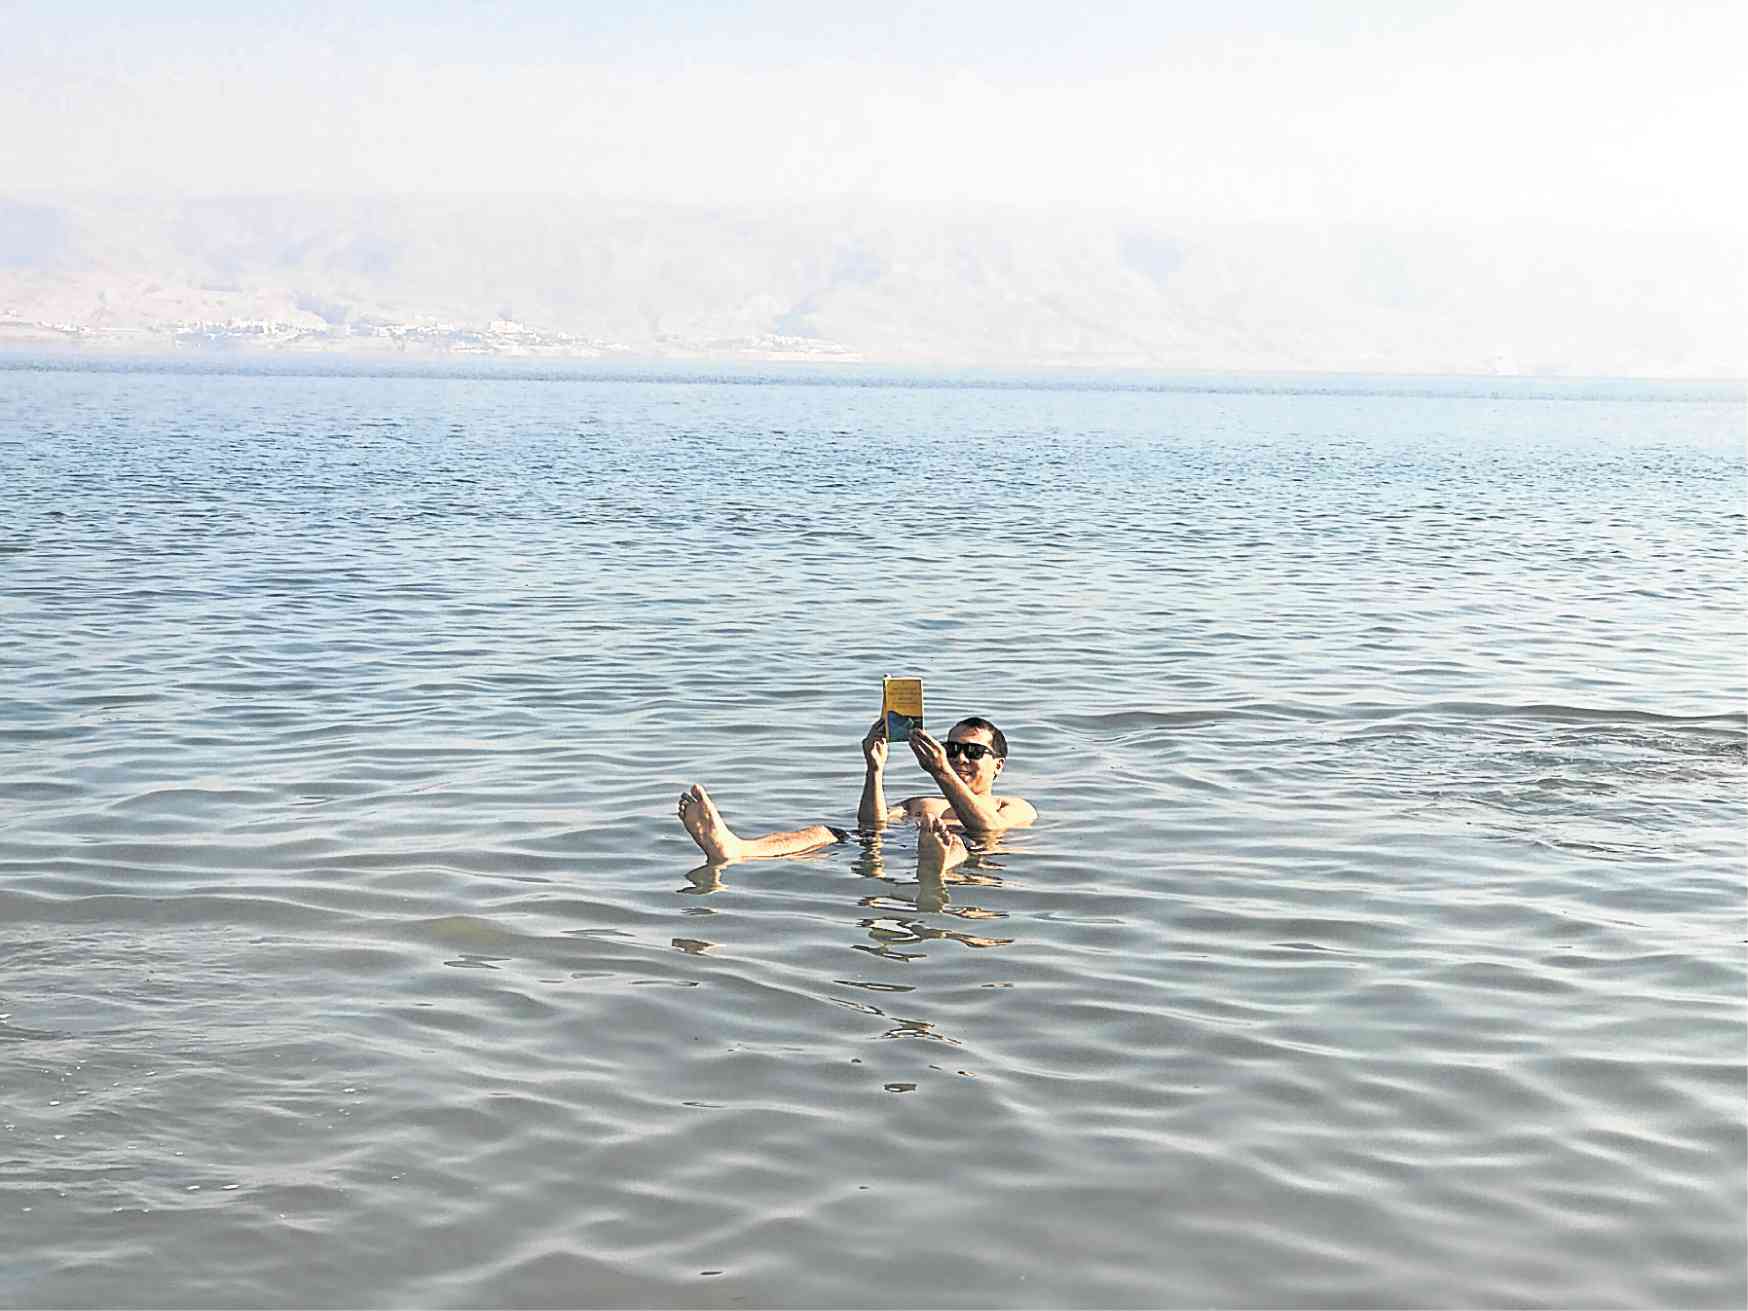 Floating in the Dead Sea in Jordan - A Practical Guide